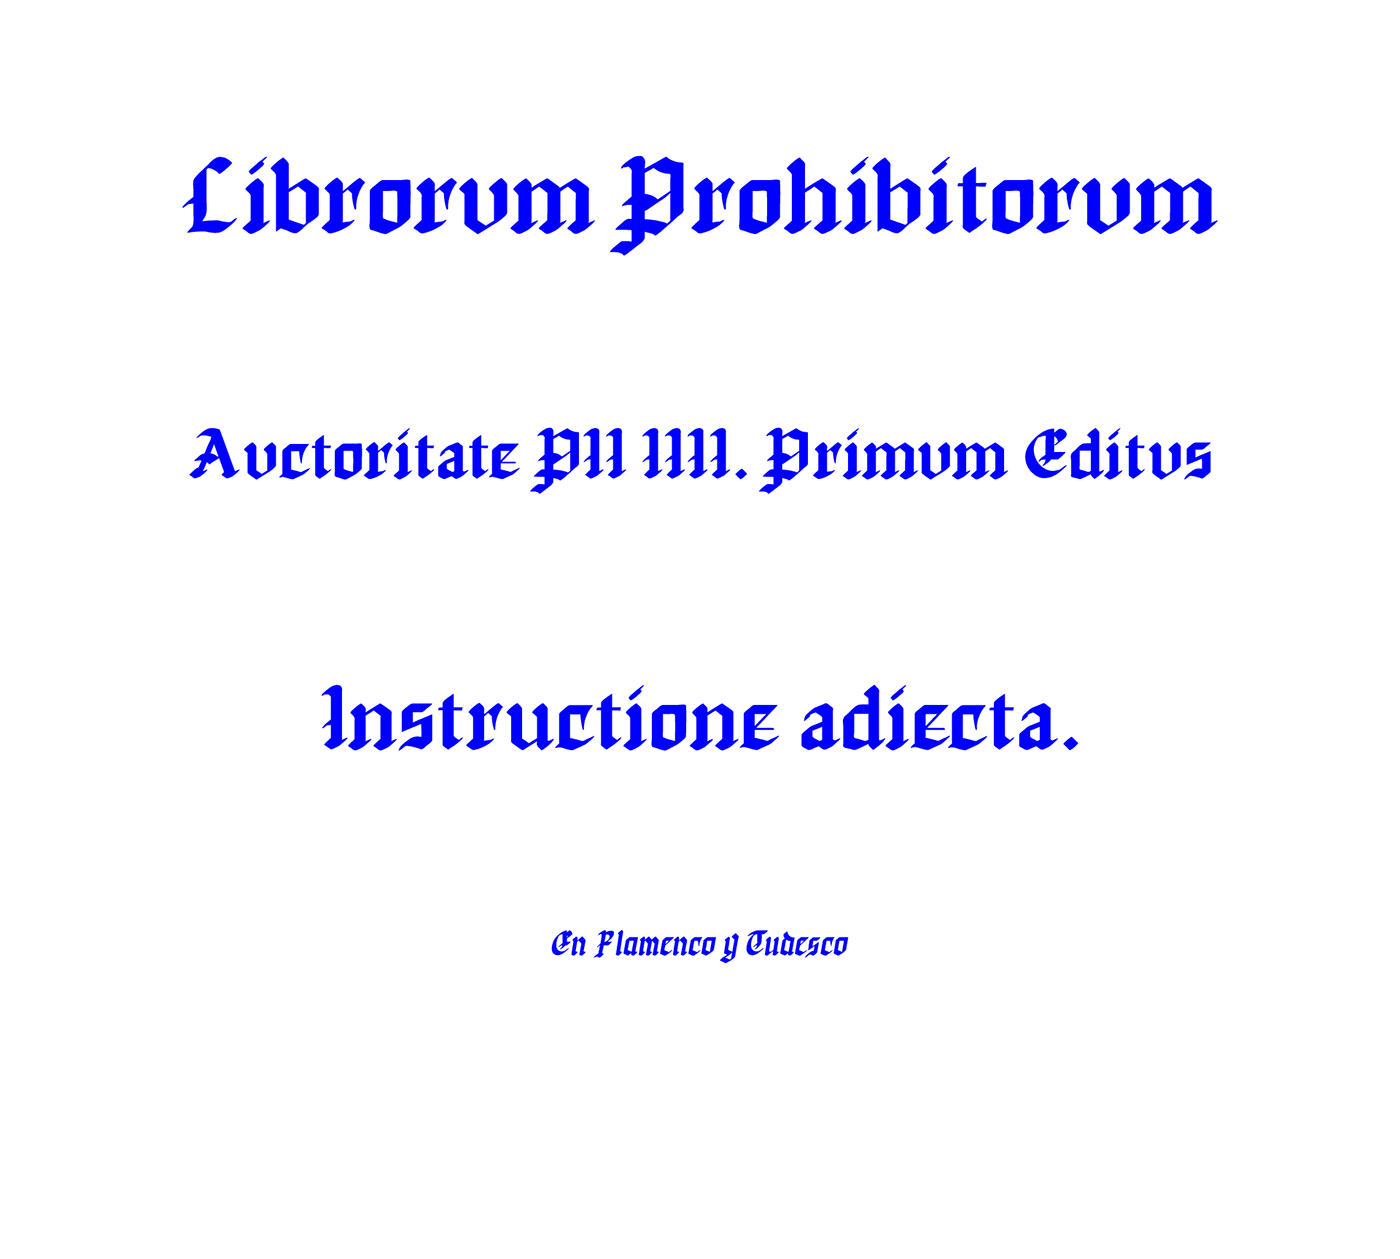 Blackletter blackletter italic Chapinero Font david espinosa DUCTUS font system sans serif type design Type Sailor